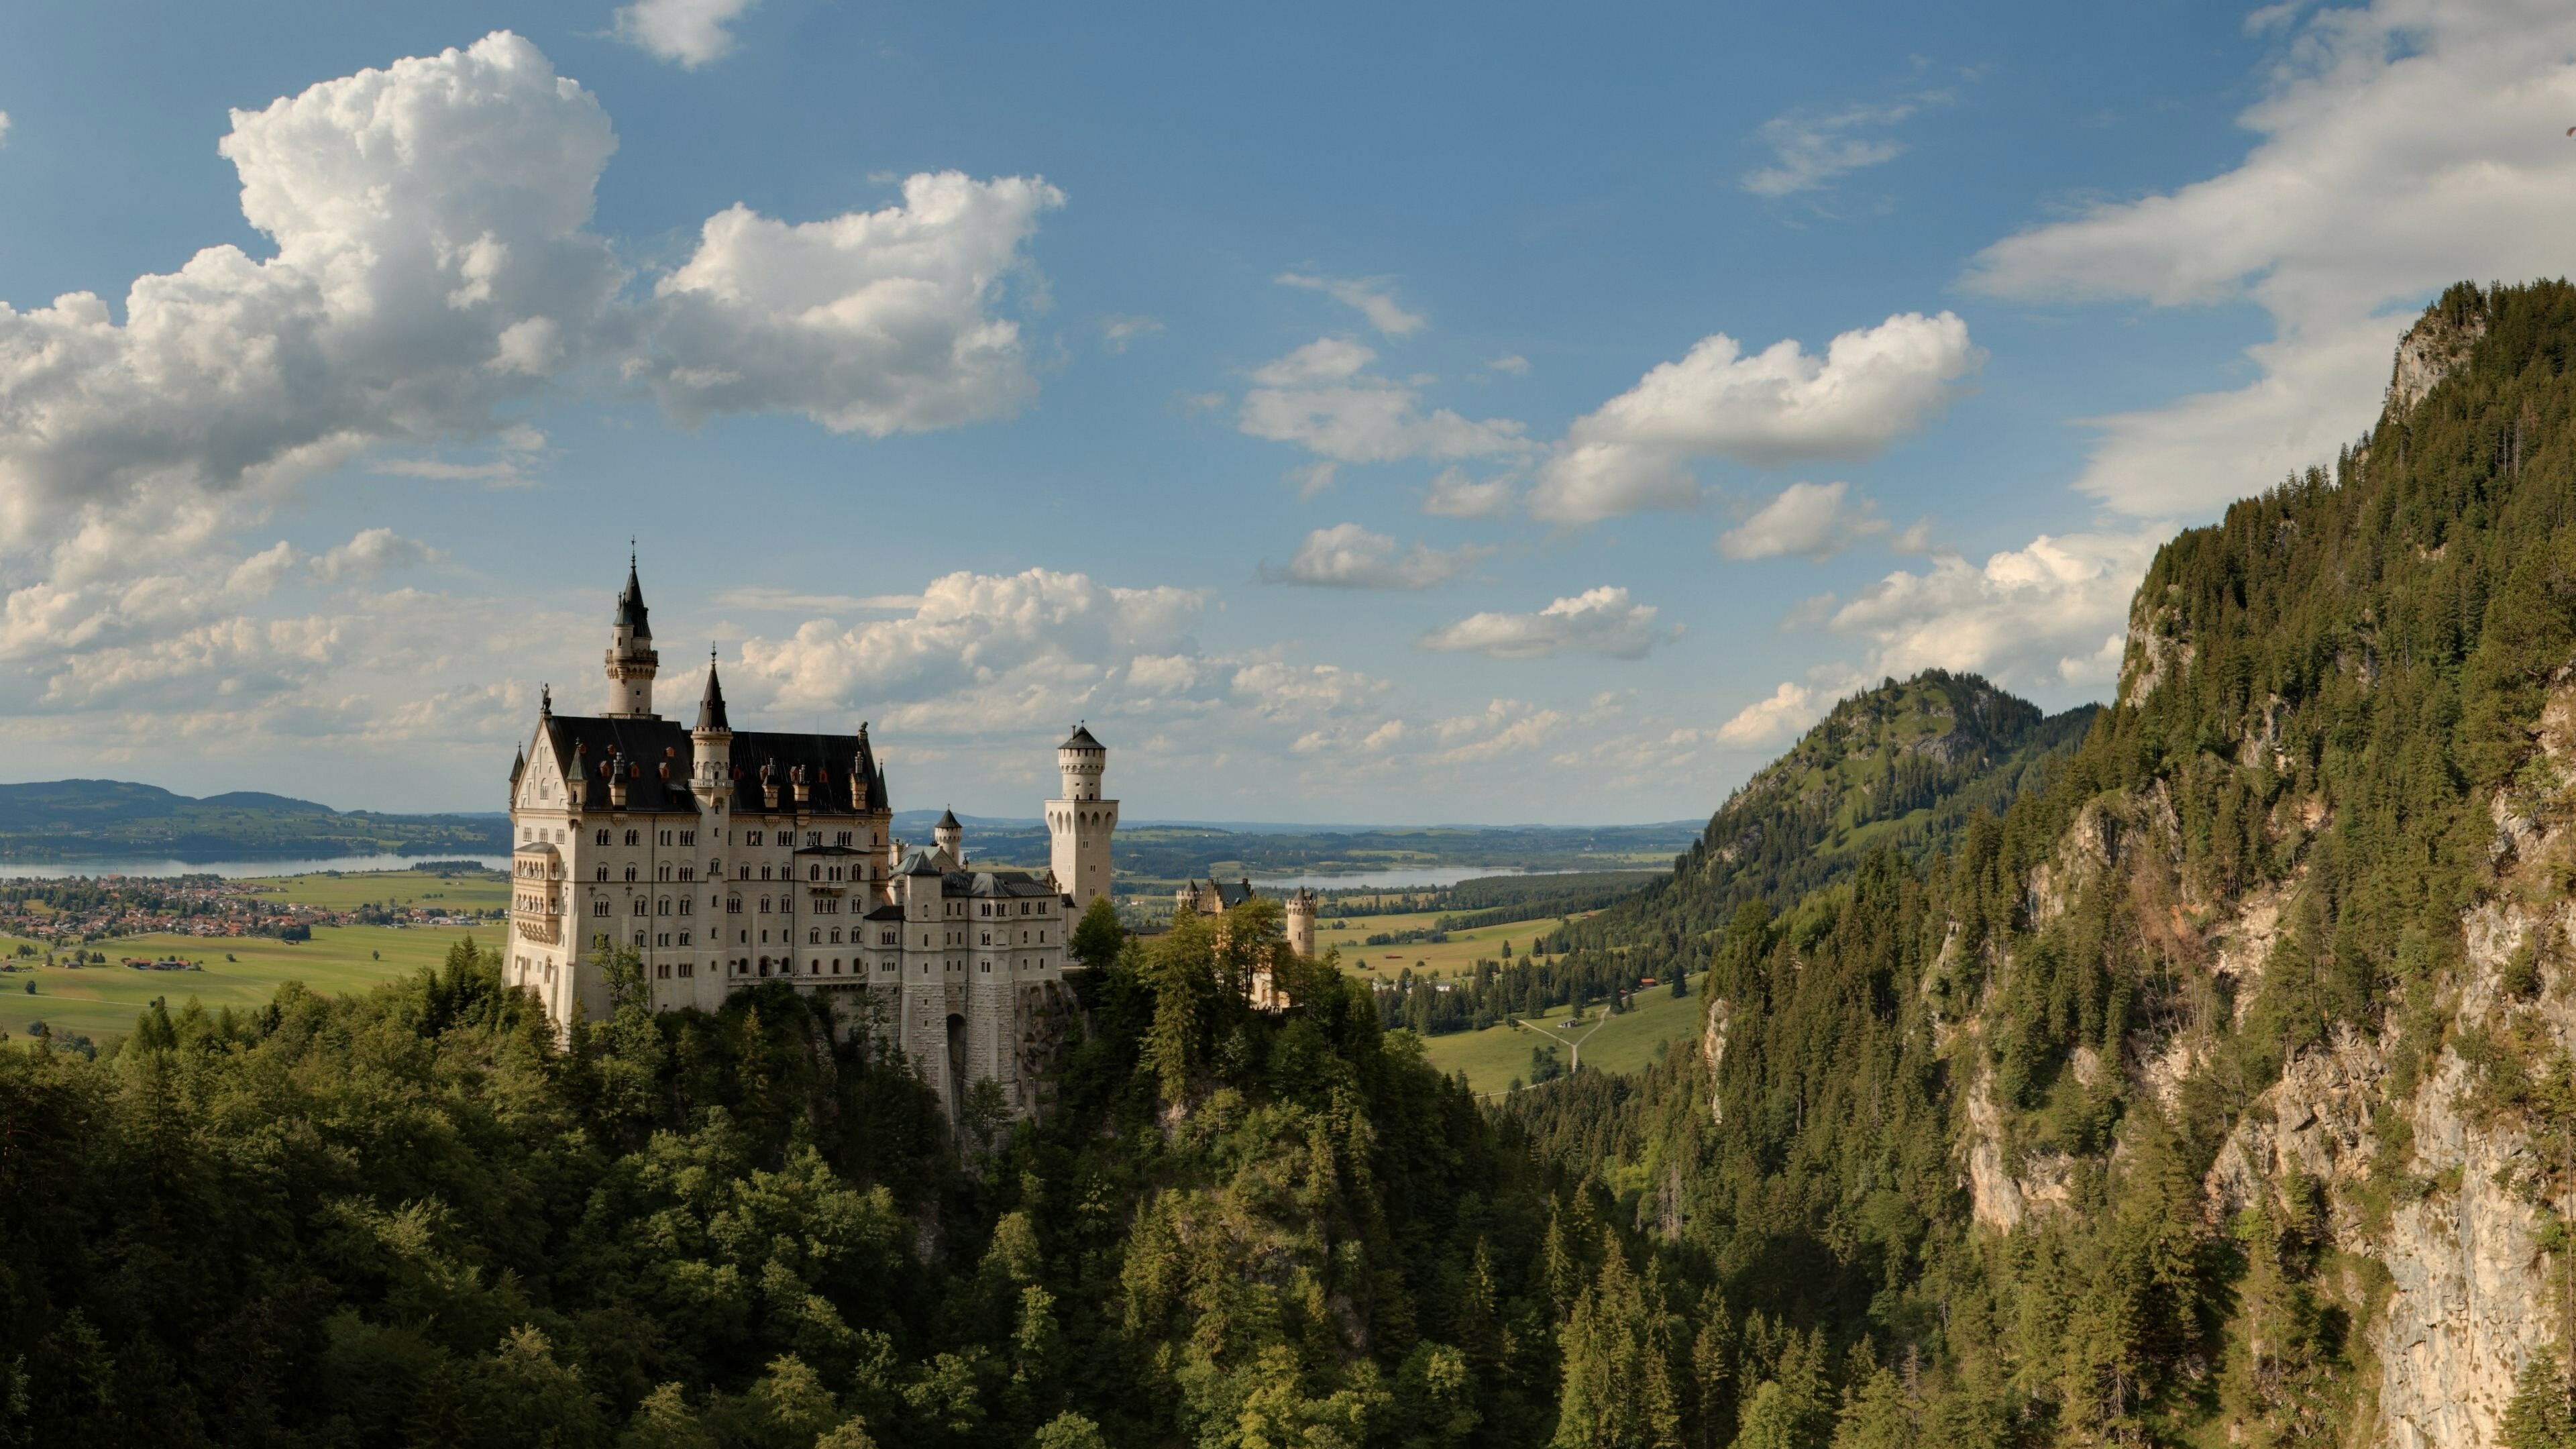 Neuschwanstein Castle: An elaborate palace near Fussen, Germany, Bavarian Alps. 3840x2160 4K Wallpaper.